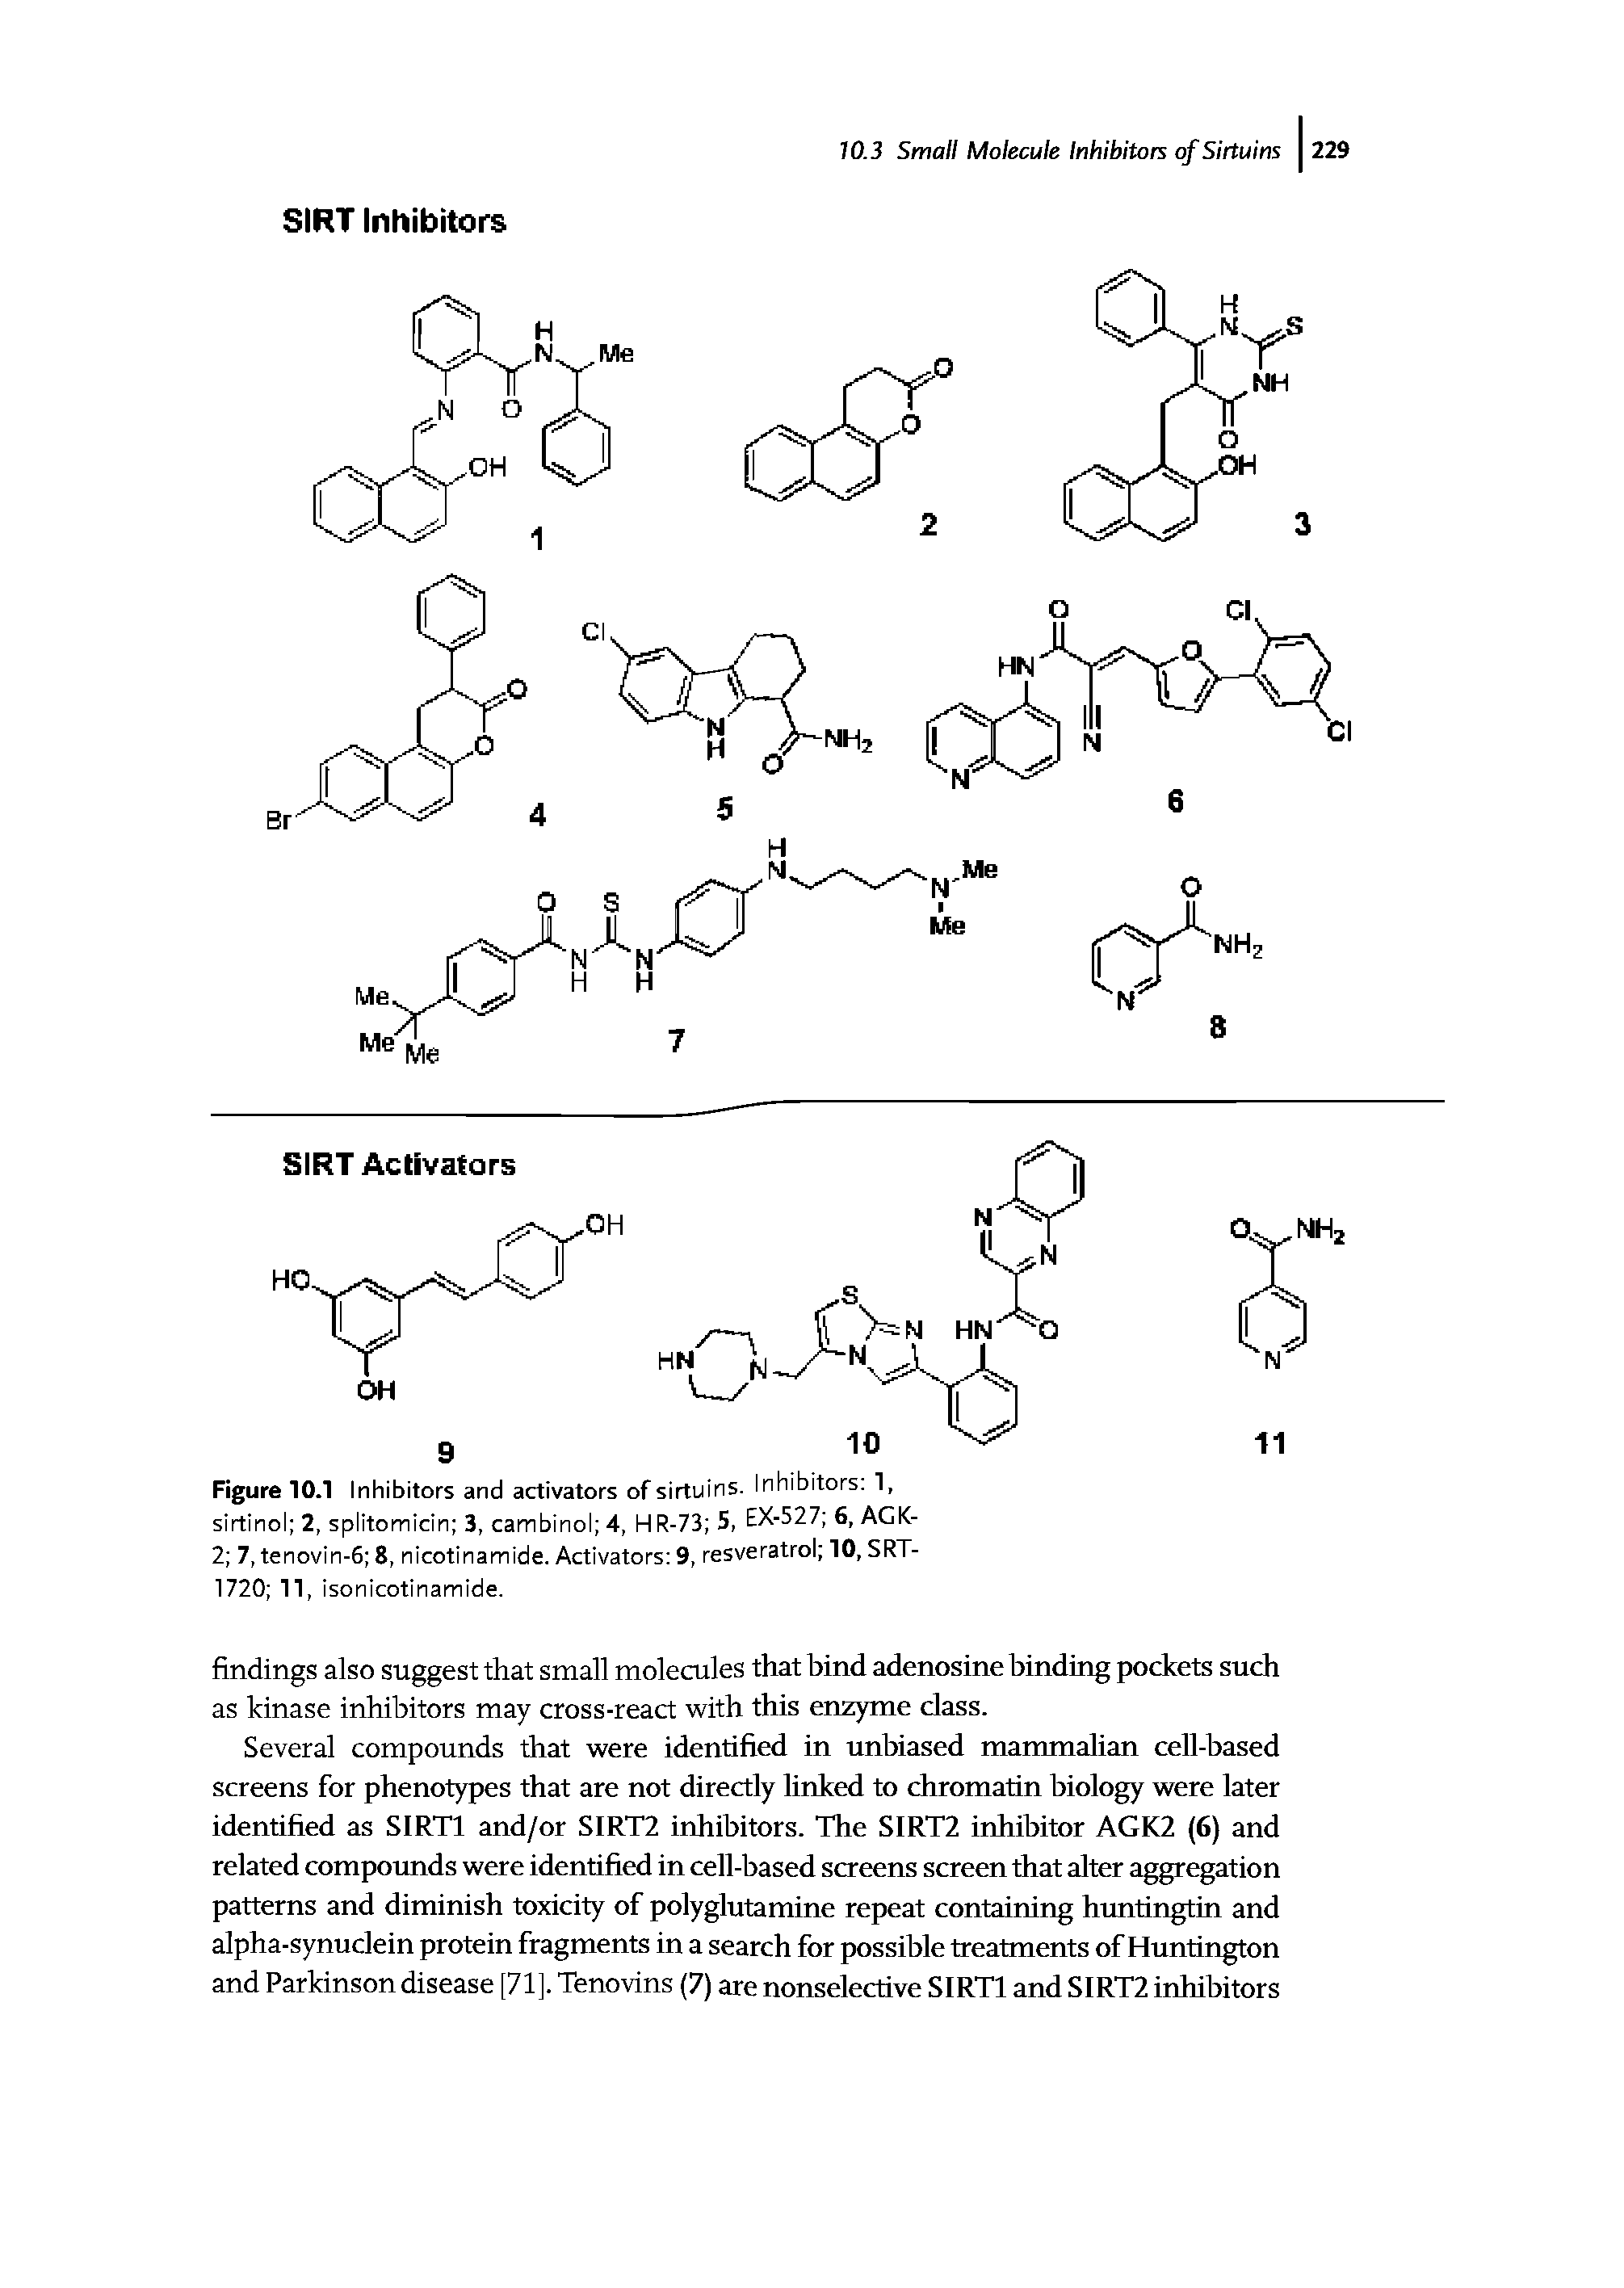 Figure 10.1 Inhibitors and activators of sirtuins. Inhibitors. 1, sirtinol 2, splitomicin 3, cambinol 4, H R-73 5, EX-527 6, AGK-2 7, tenovin-6 8, nicotinamide. Activators 9, resveratrol 10, SRT-1720 11, isonicotinamide.